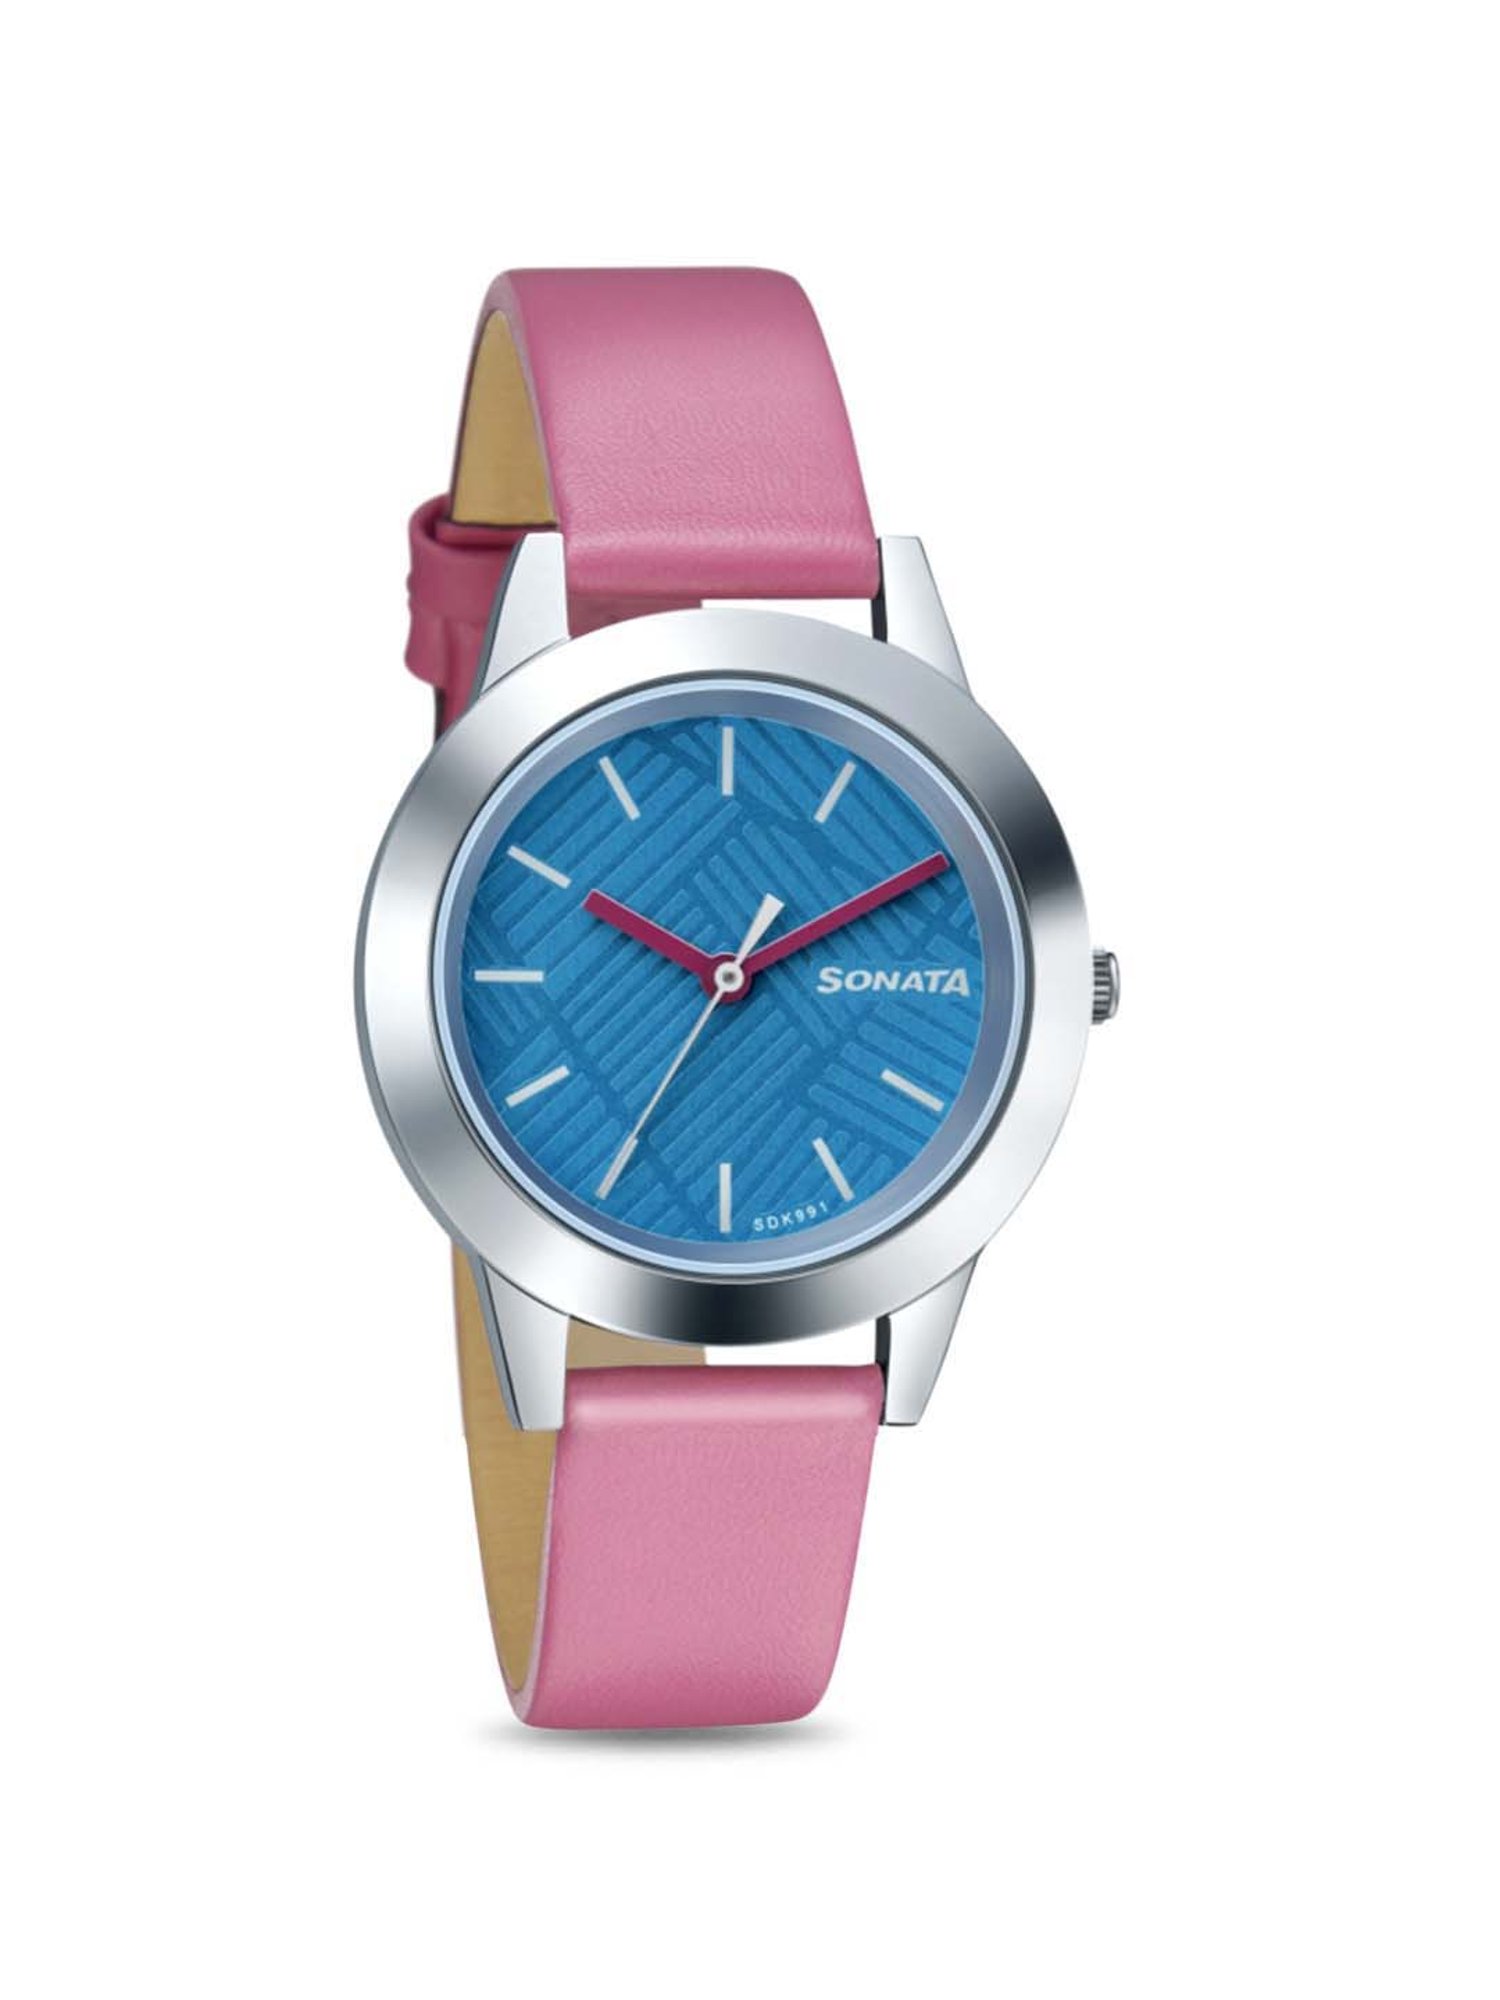 Sonata Black Dial Analog watch For Men-NR7007YM04 : Amazon.in: Fashion